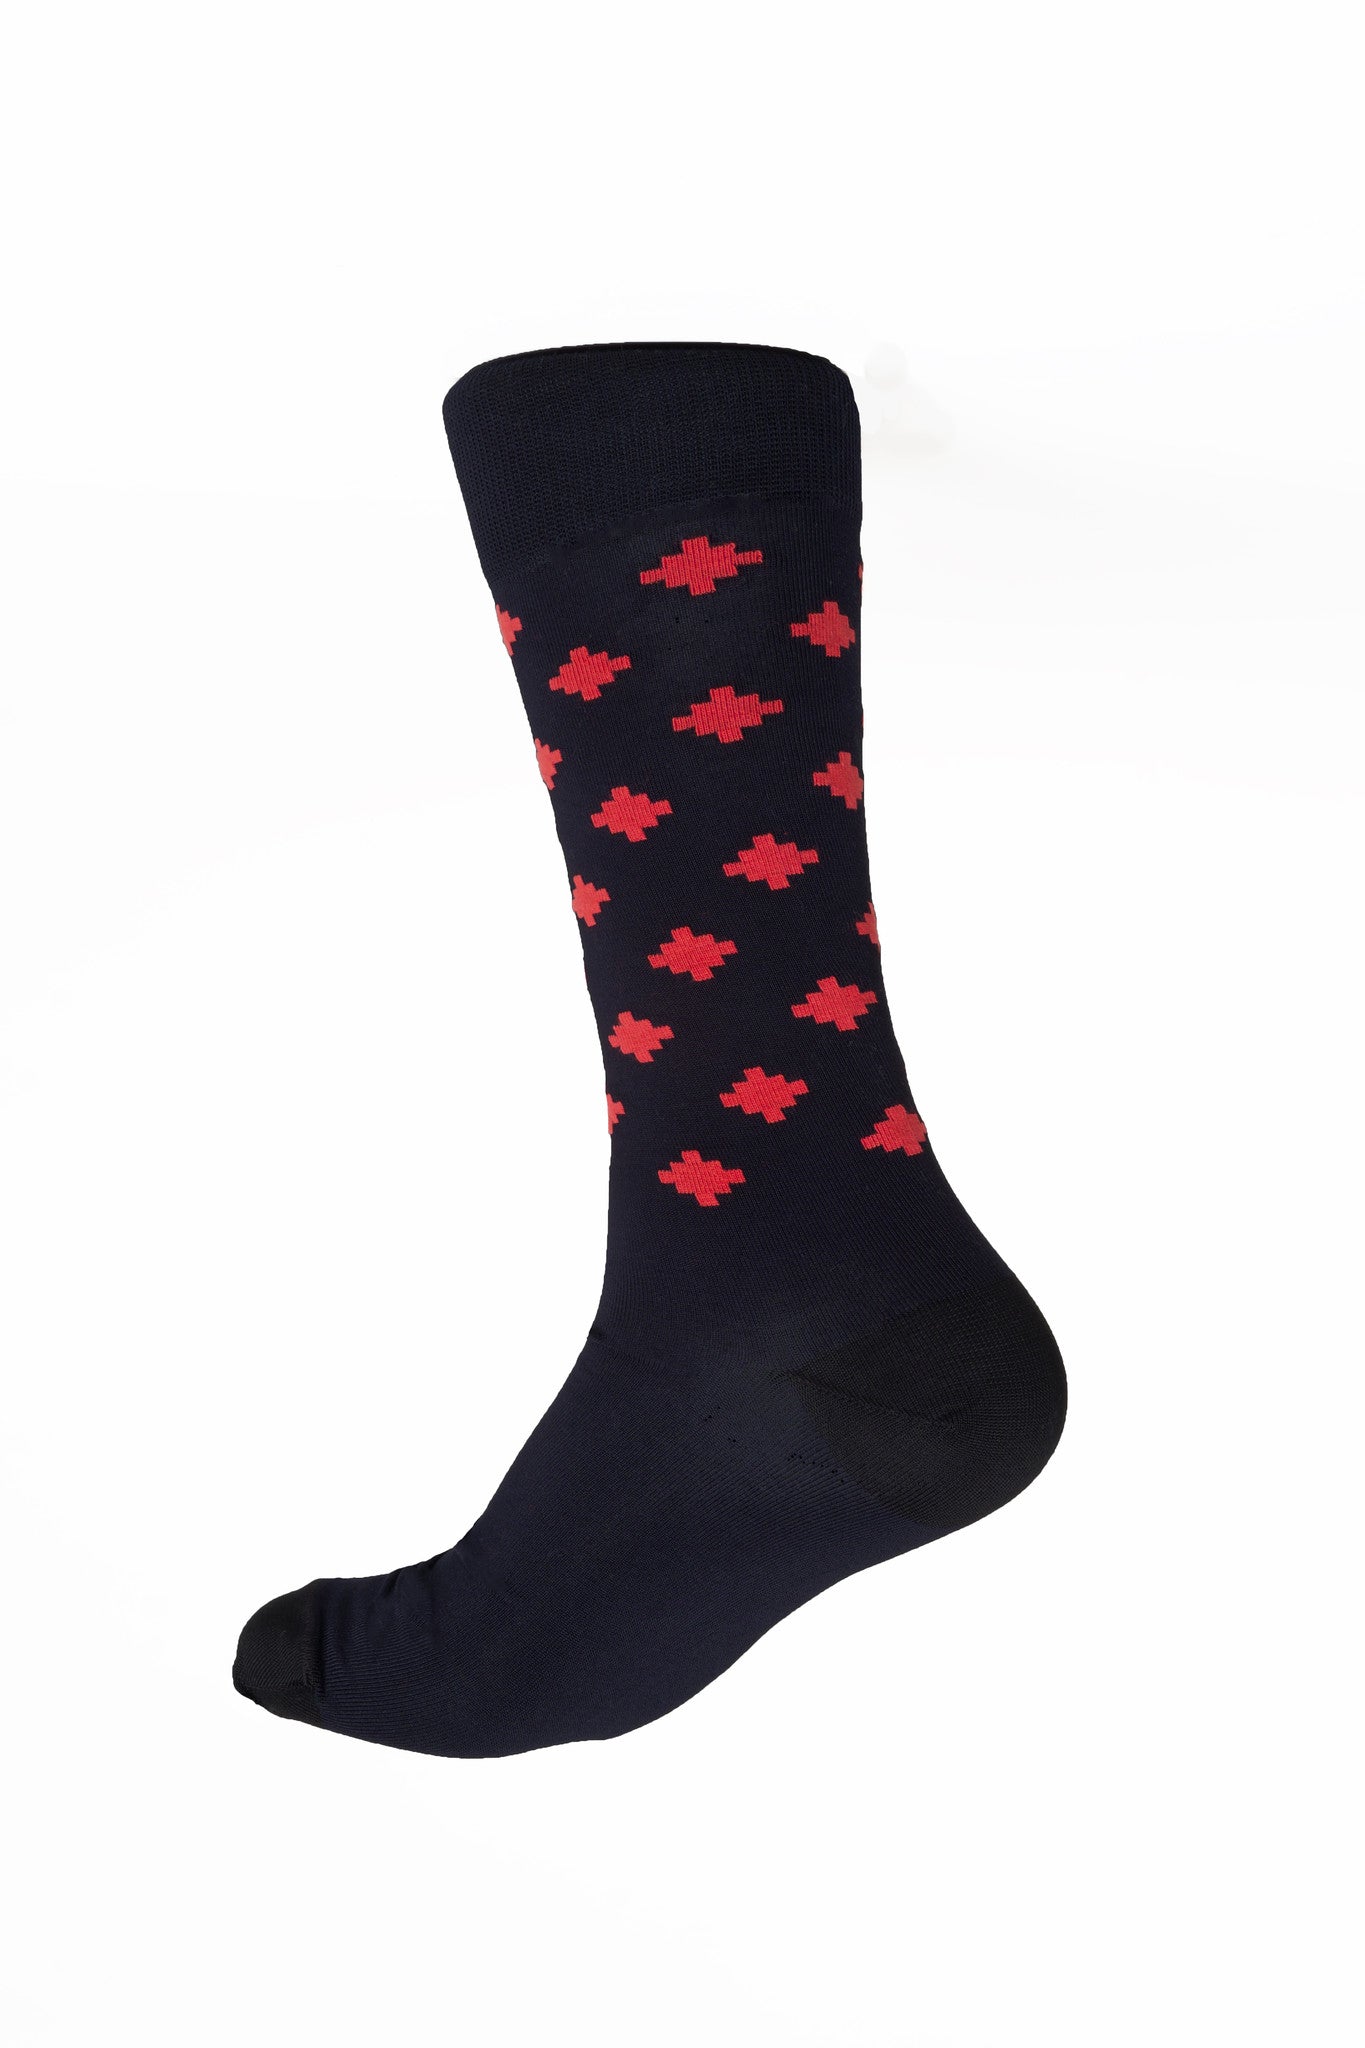 Giraffecool-Giraffe-Cool-Brand-Black-Red-Pixelated-Dots-Pixel-Mercerized-And-Brushed-Cotton-Fashion-Socks-Back